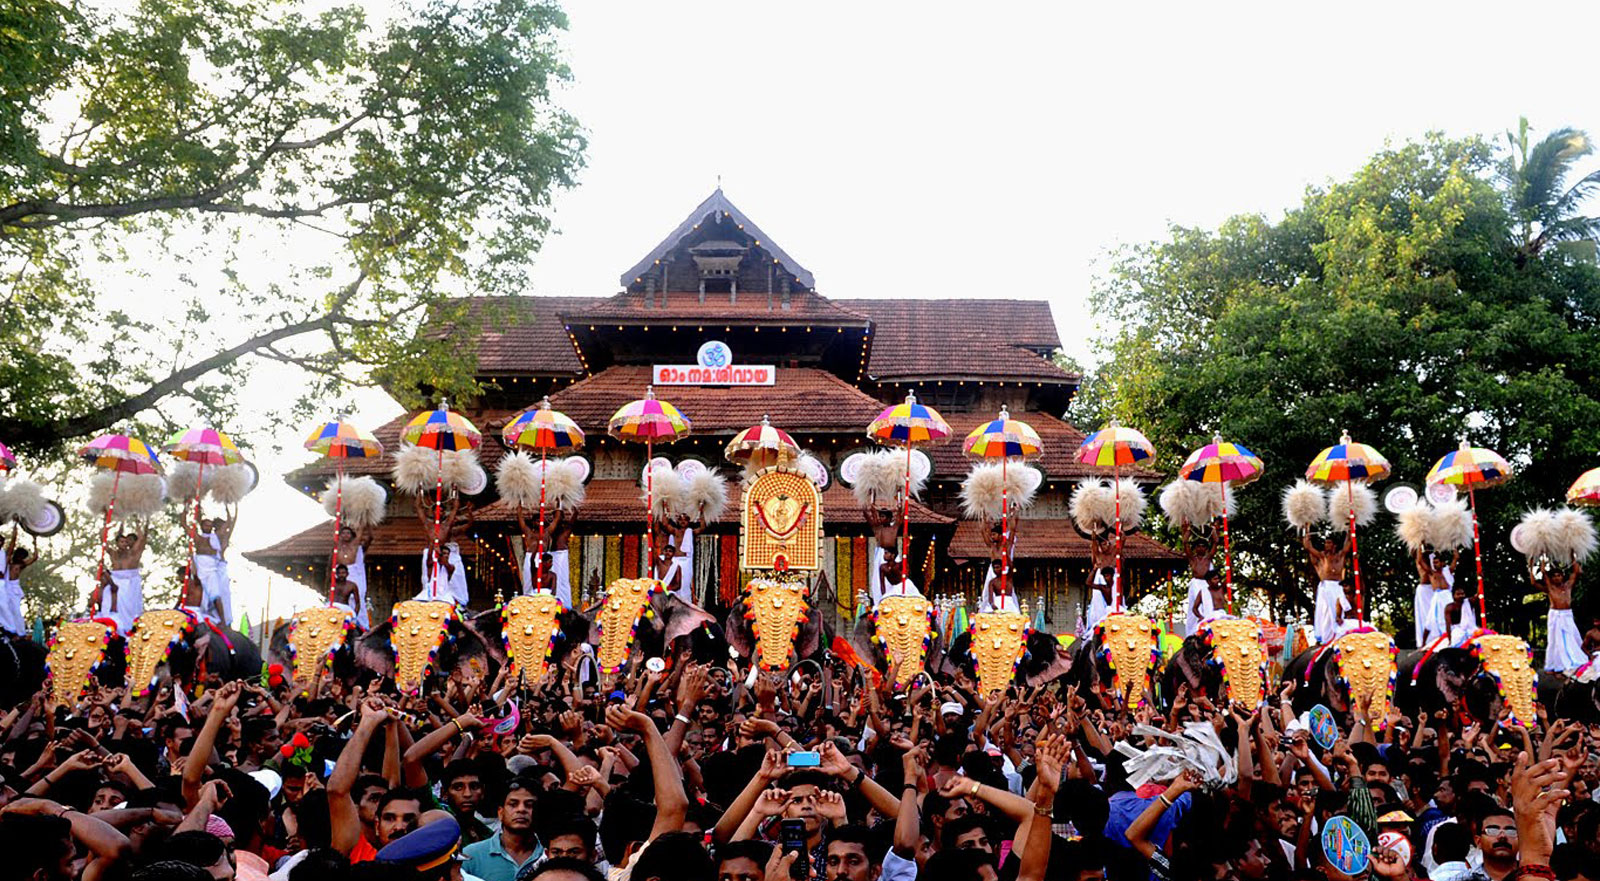 8. Thrissur Pooram Elephant Festival